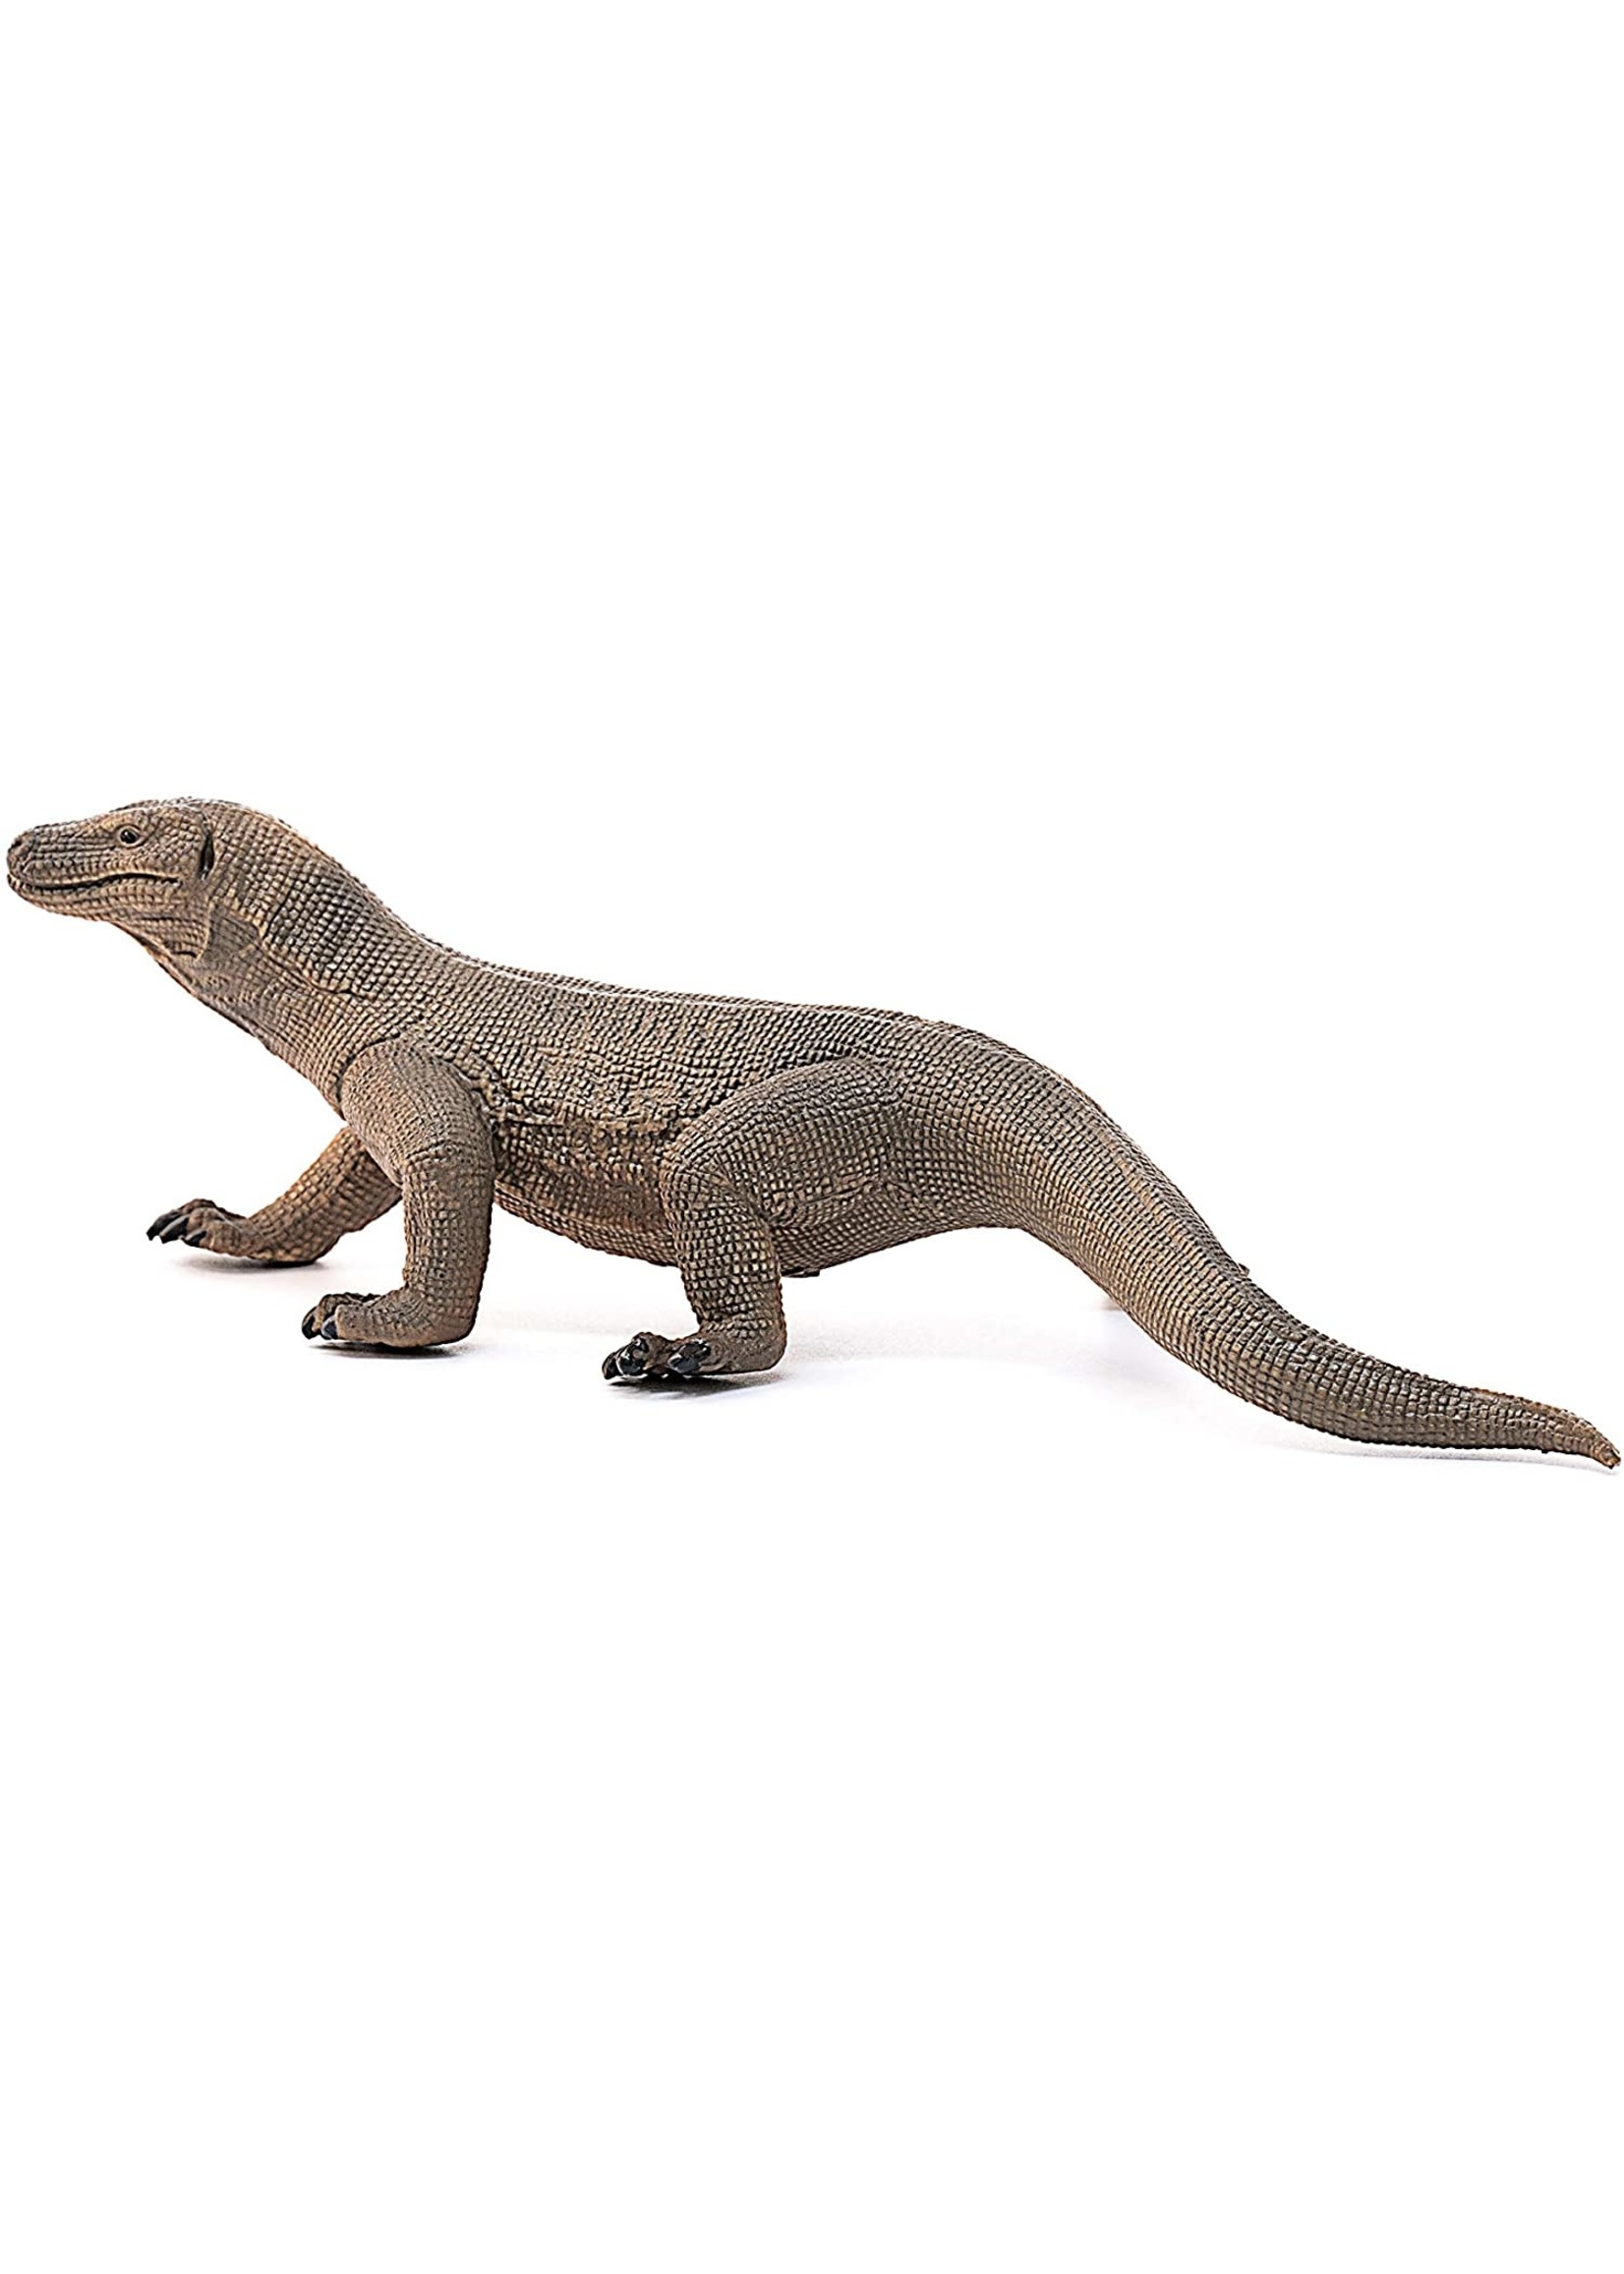 Schleich Wild Life Komodo Dragon Collectable Animal Figure 14826 